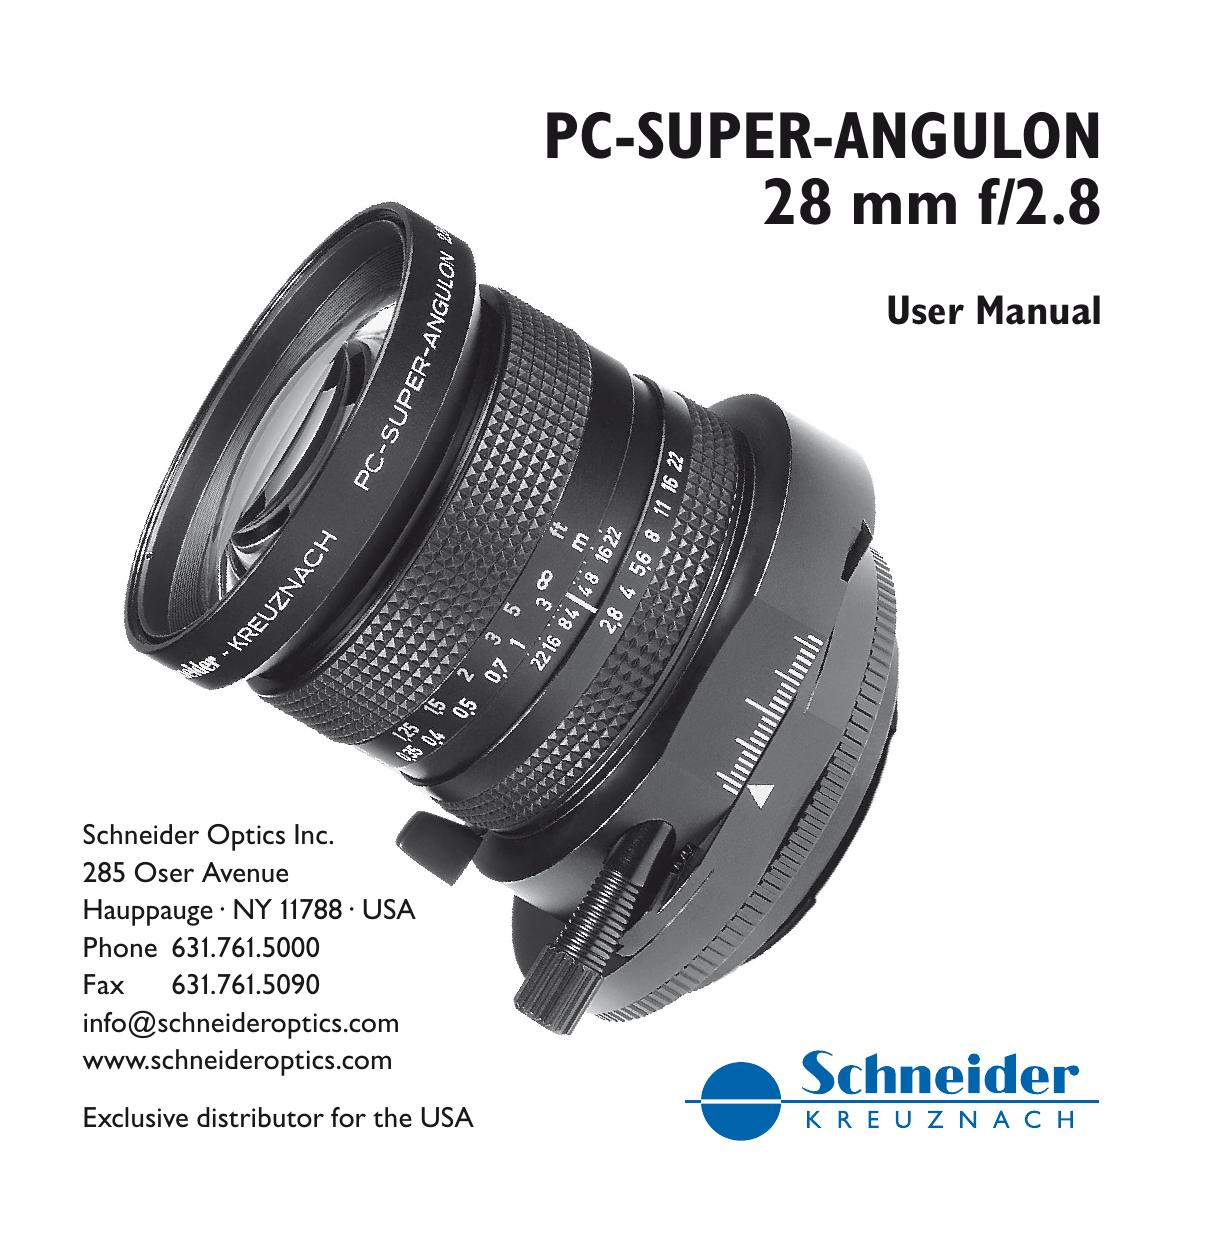 Schneider Optics PC-SUPER-ANGULON 28 mm f/2.8 Camera Lens User Manual